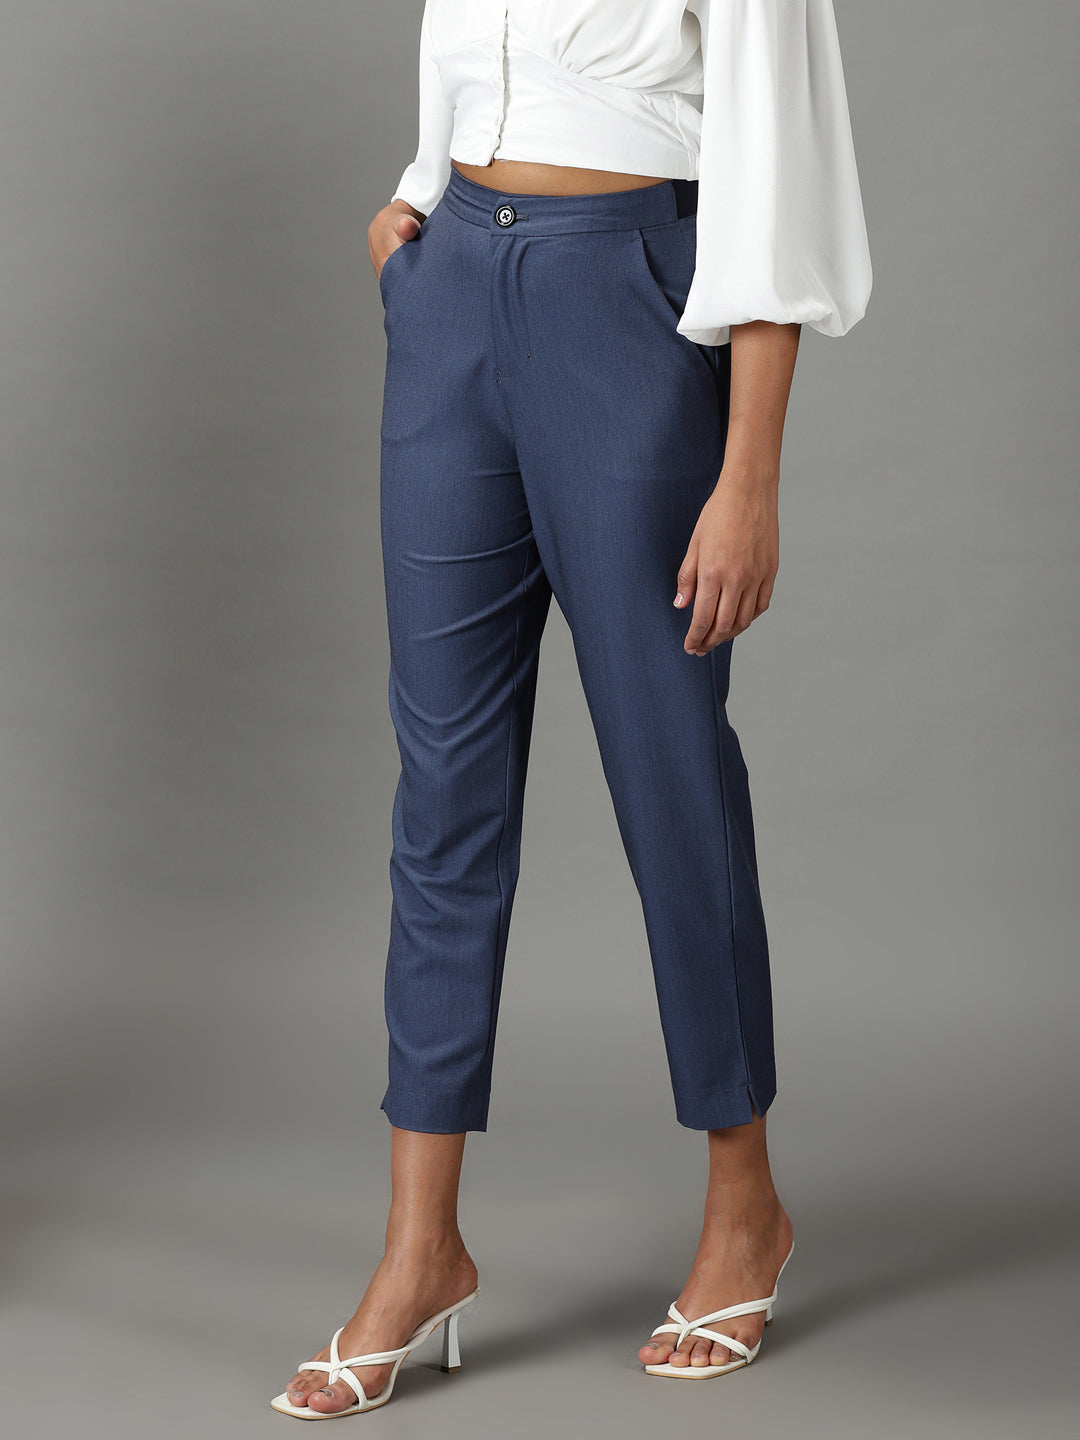 Women's Blue Solid Formal Trouser